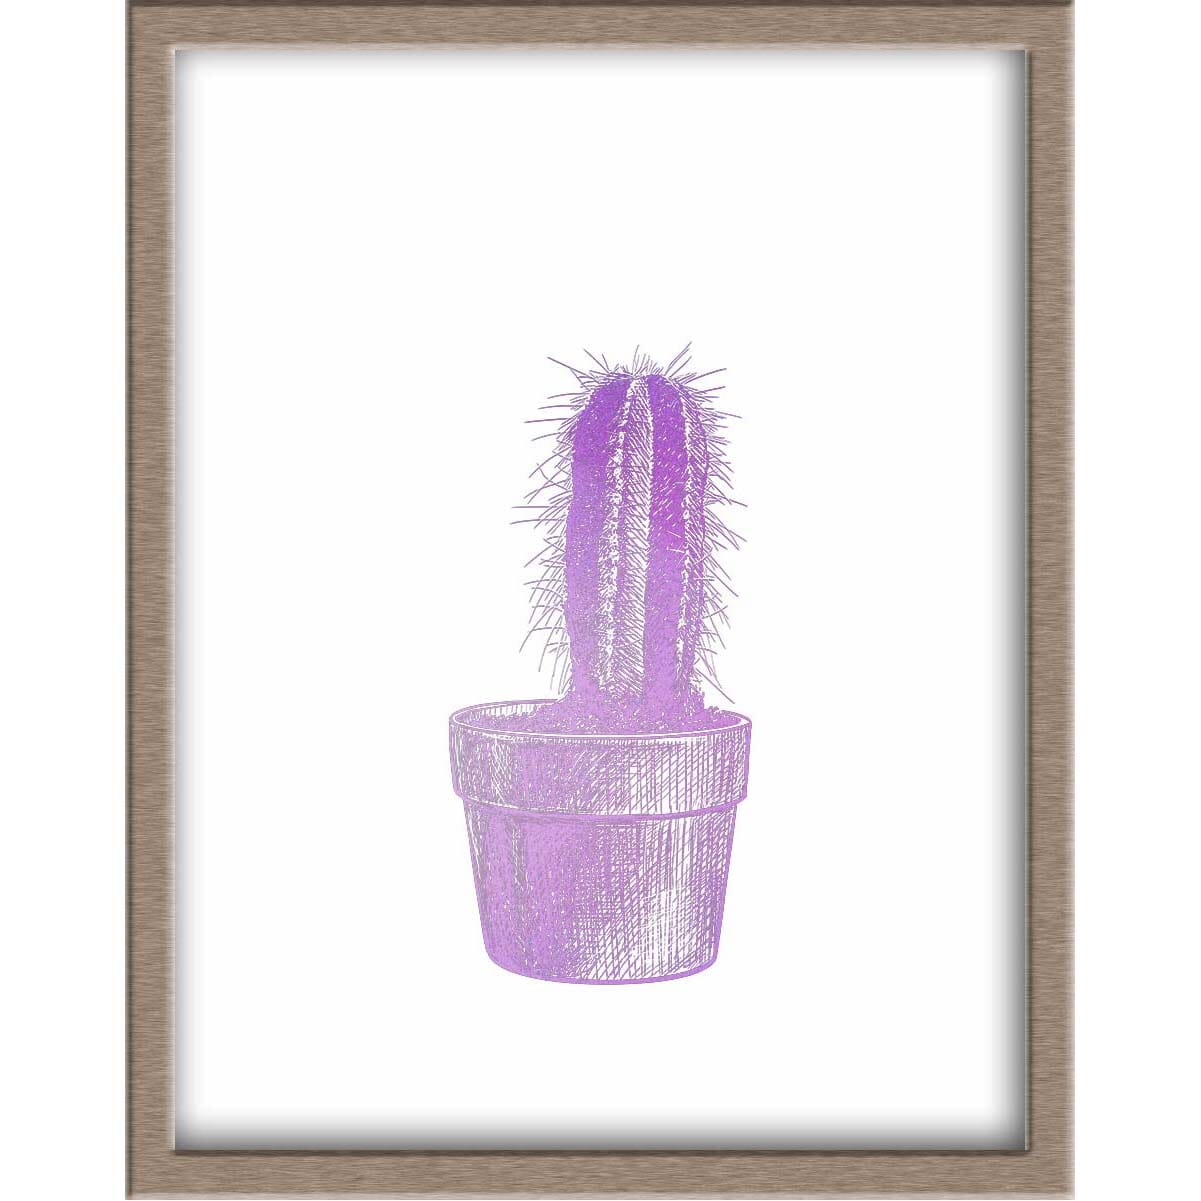 Miniature Potted Cactus Foiled Print Posters, Prints, & Visual Artwork JoyousJoyfulJoyness 